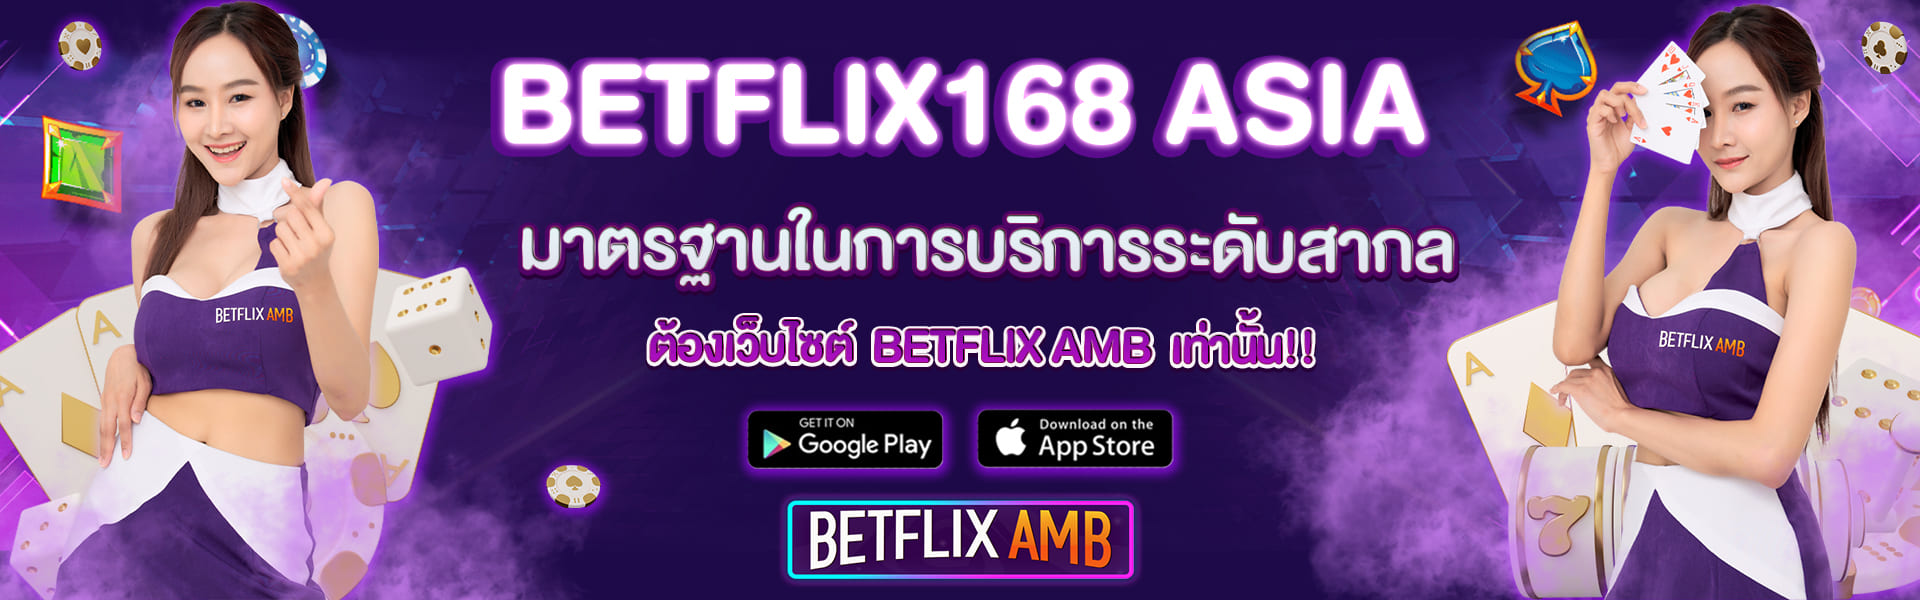 BETFLIX168 ASIA